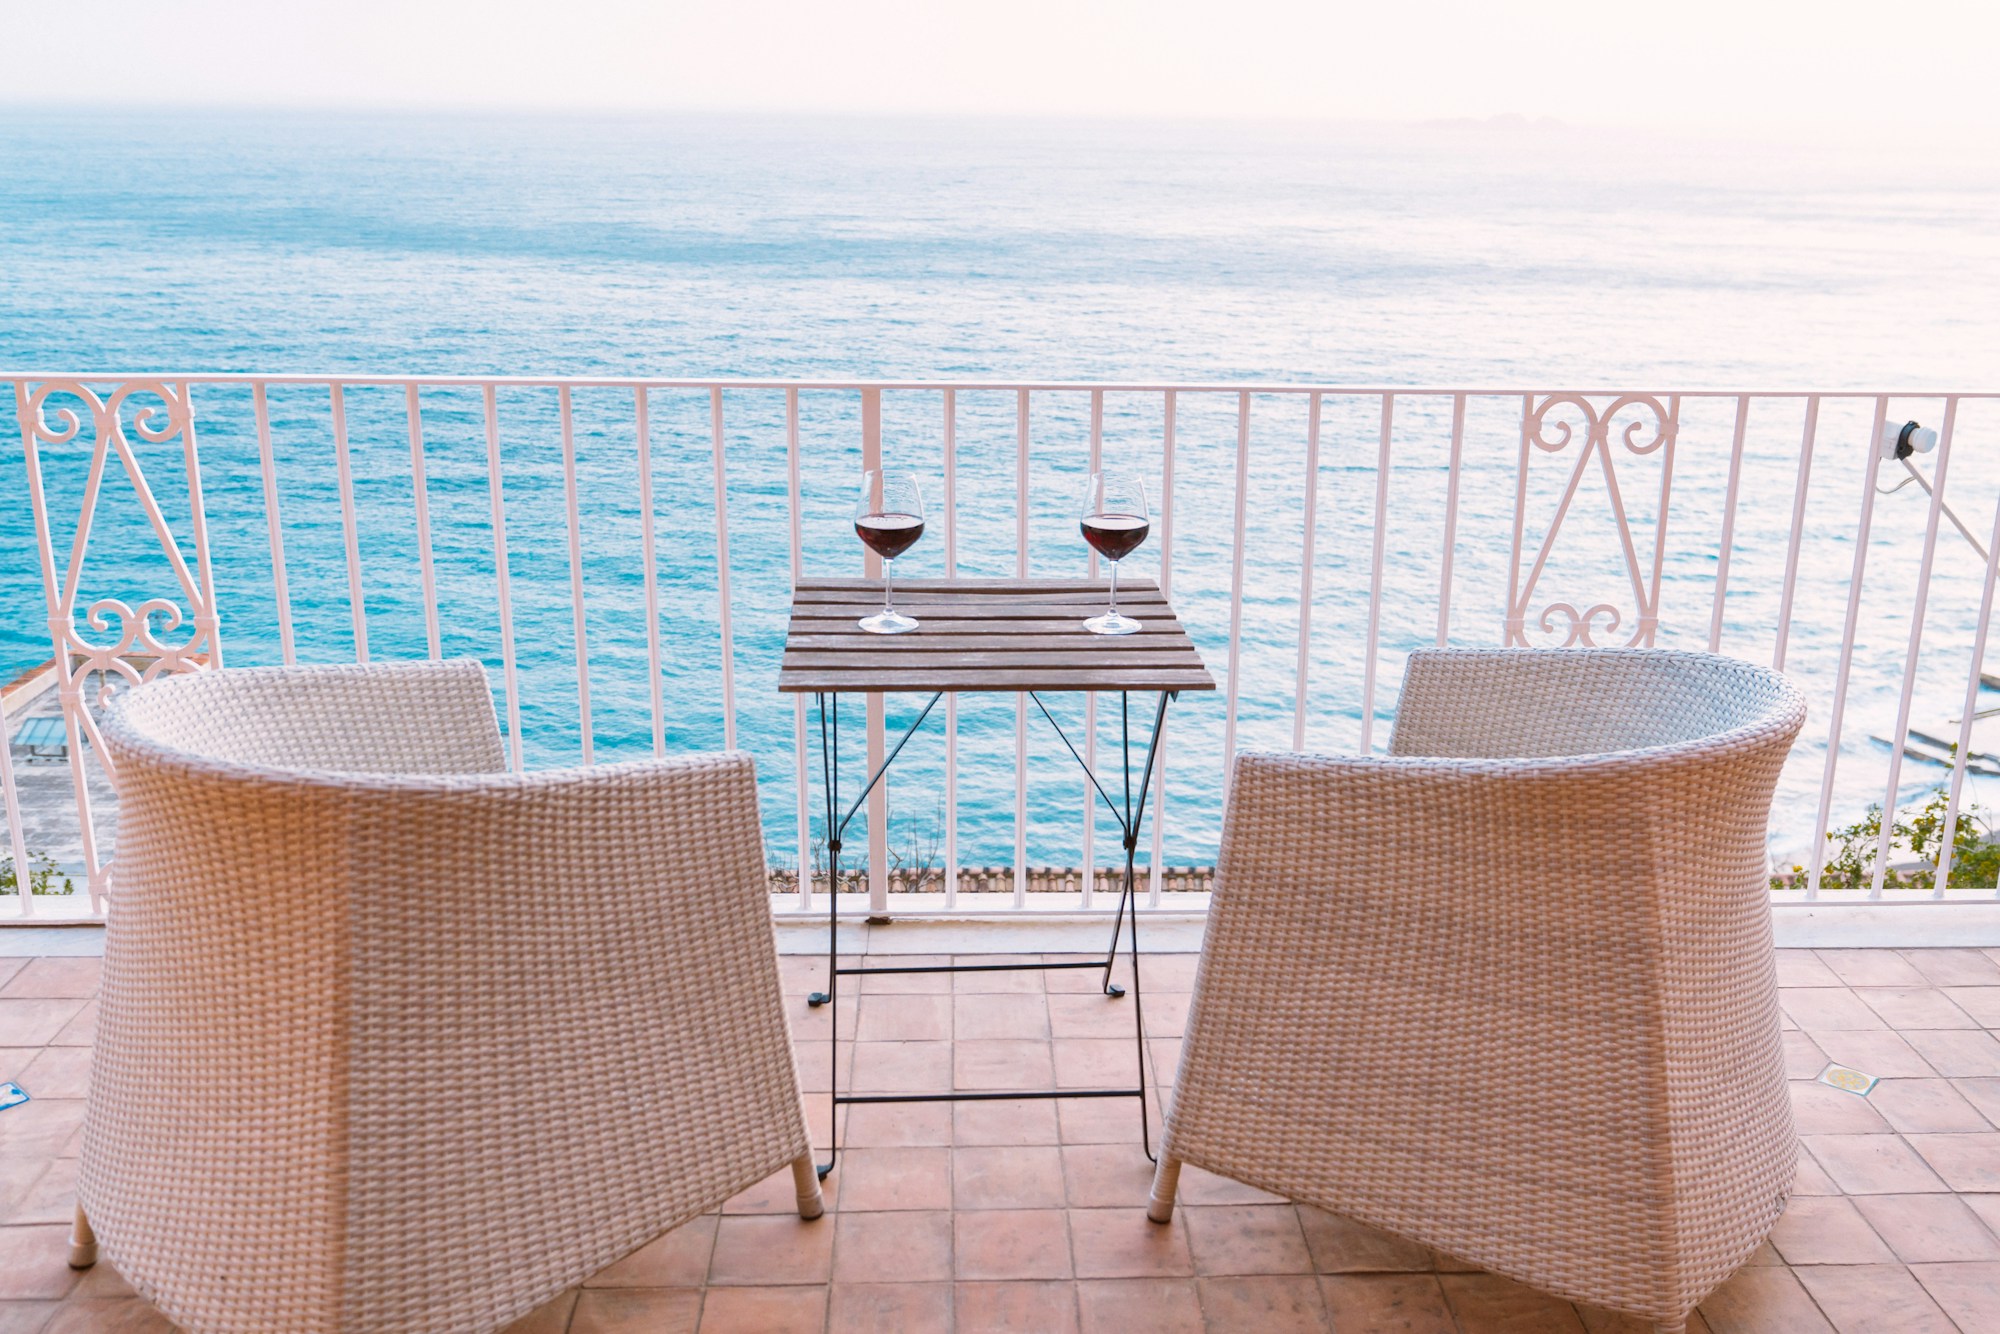 8 Day Sardinian Serenity: Wine, Beaches, and Mediterranean Magic